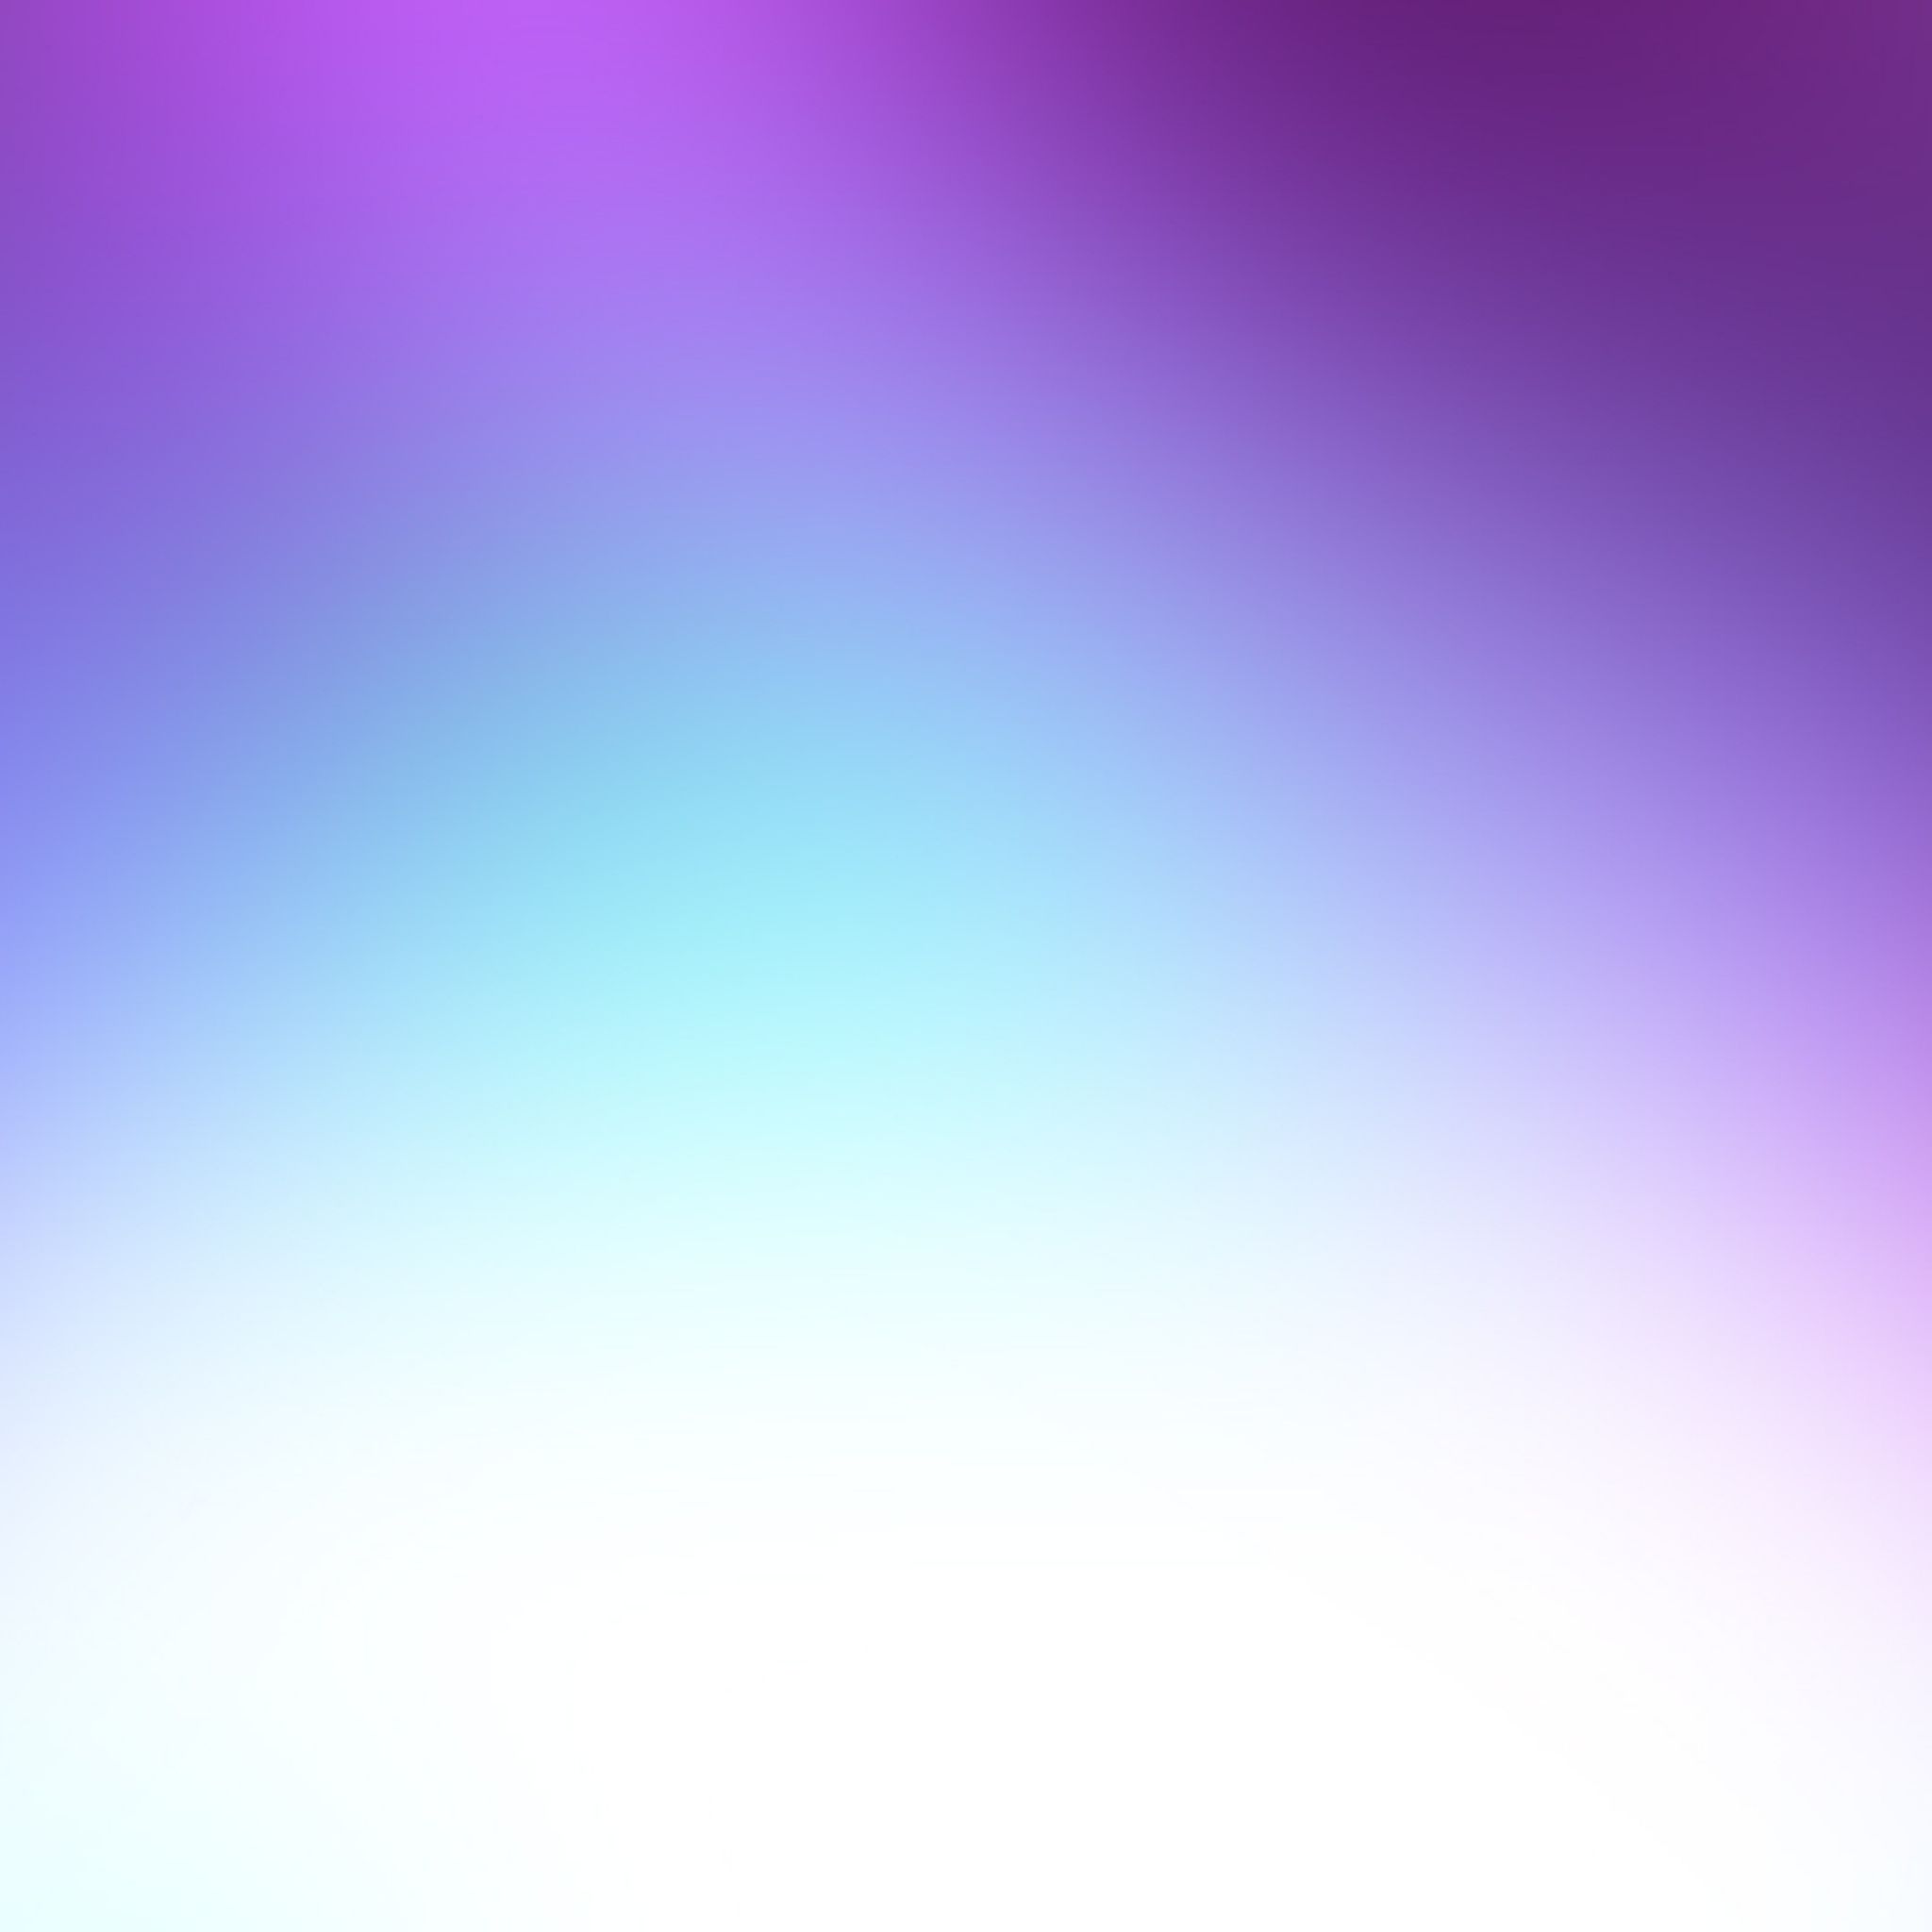 wallpaper roxo,violet,purple,blue,lilac,sky